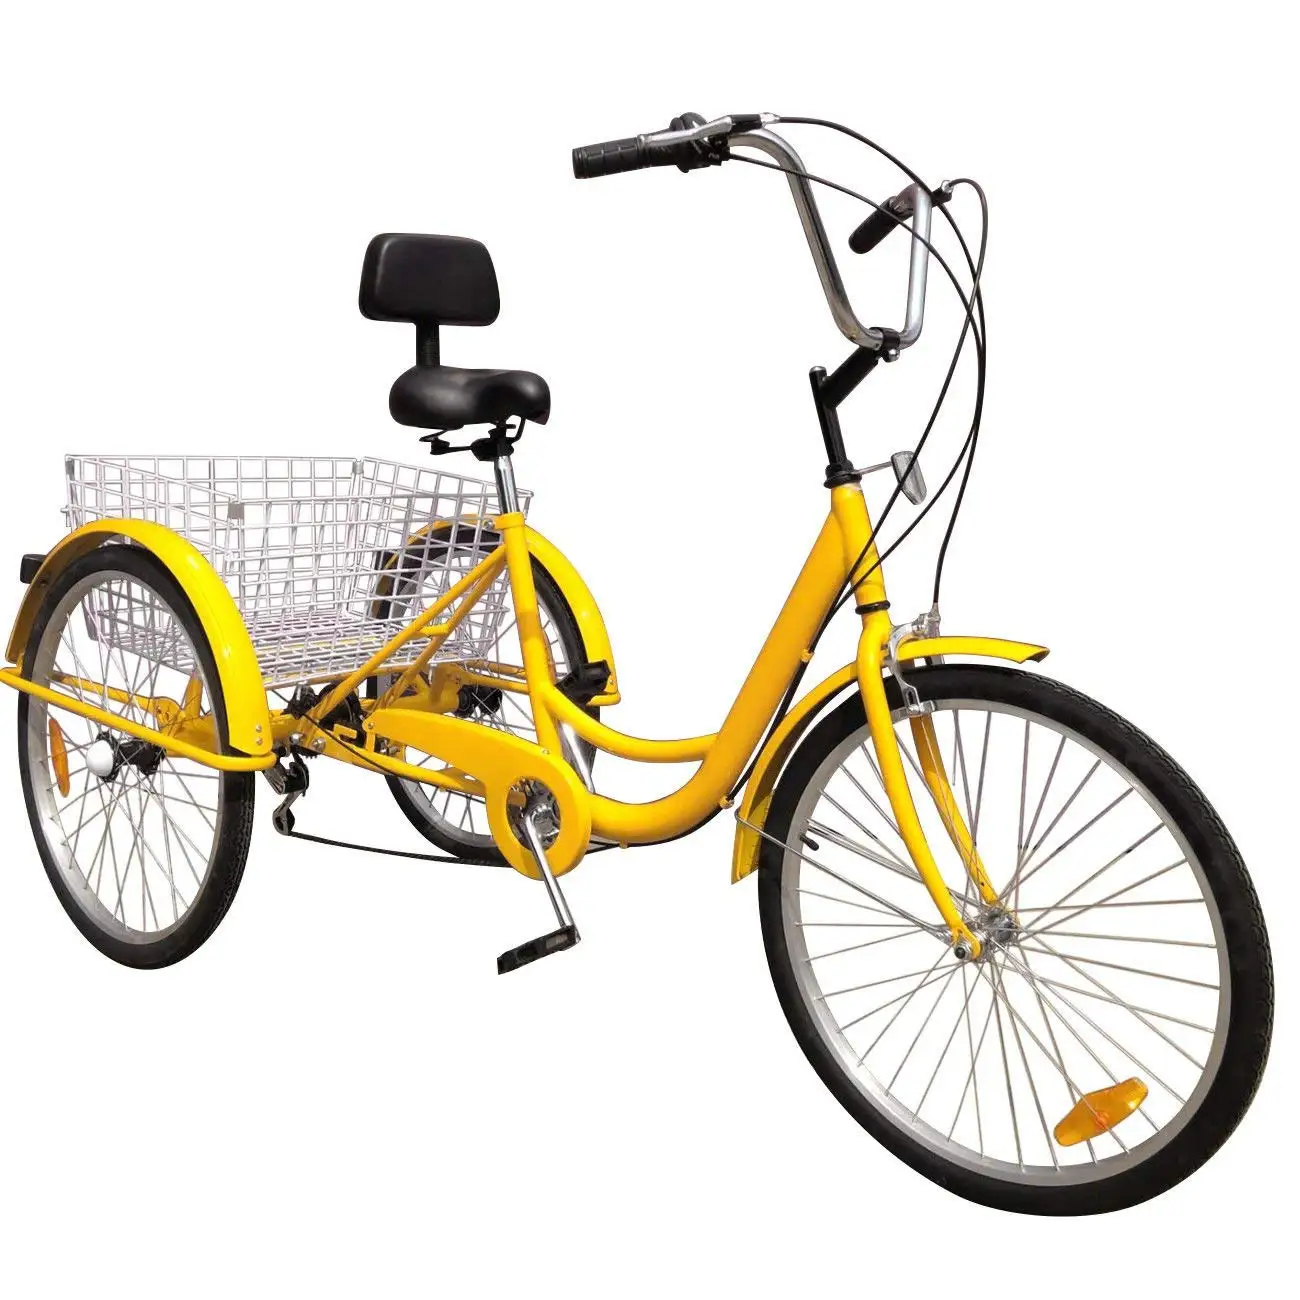 Bikes bikes трехколесный. Трехколесный велосипед 24. Trike велосипед 24. Трёхколёсный велосипед взрослый. Трехколесный взрослый вело.